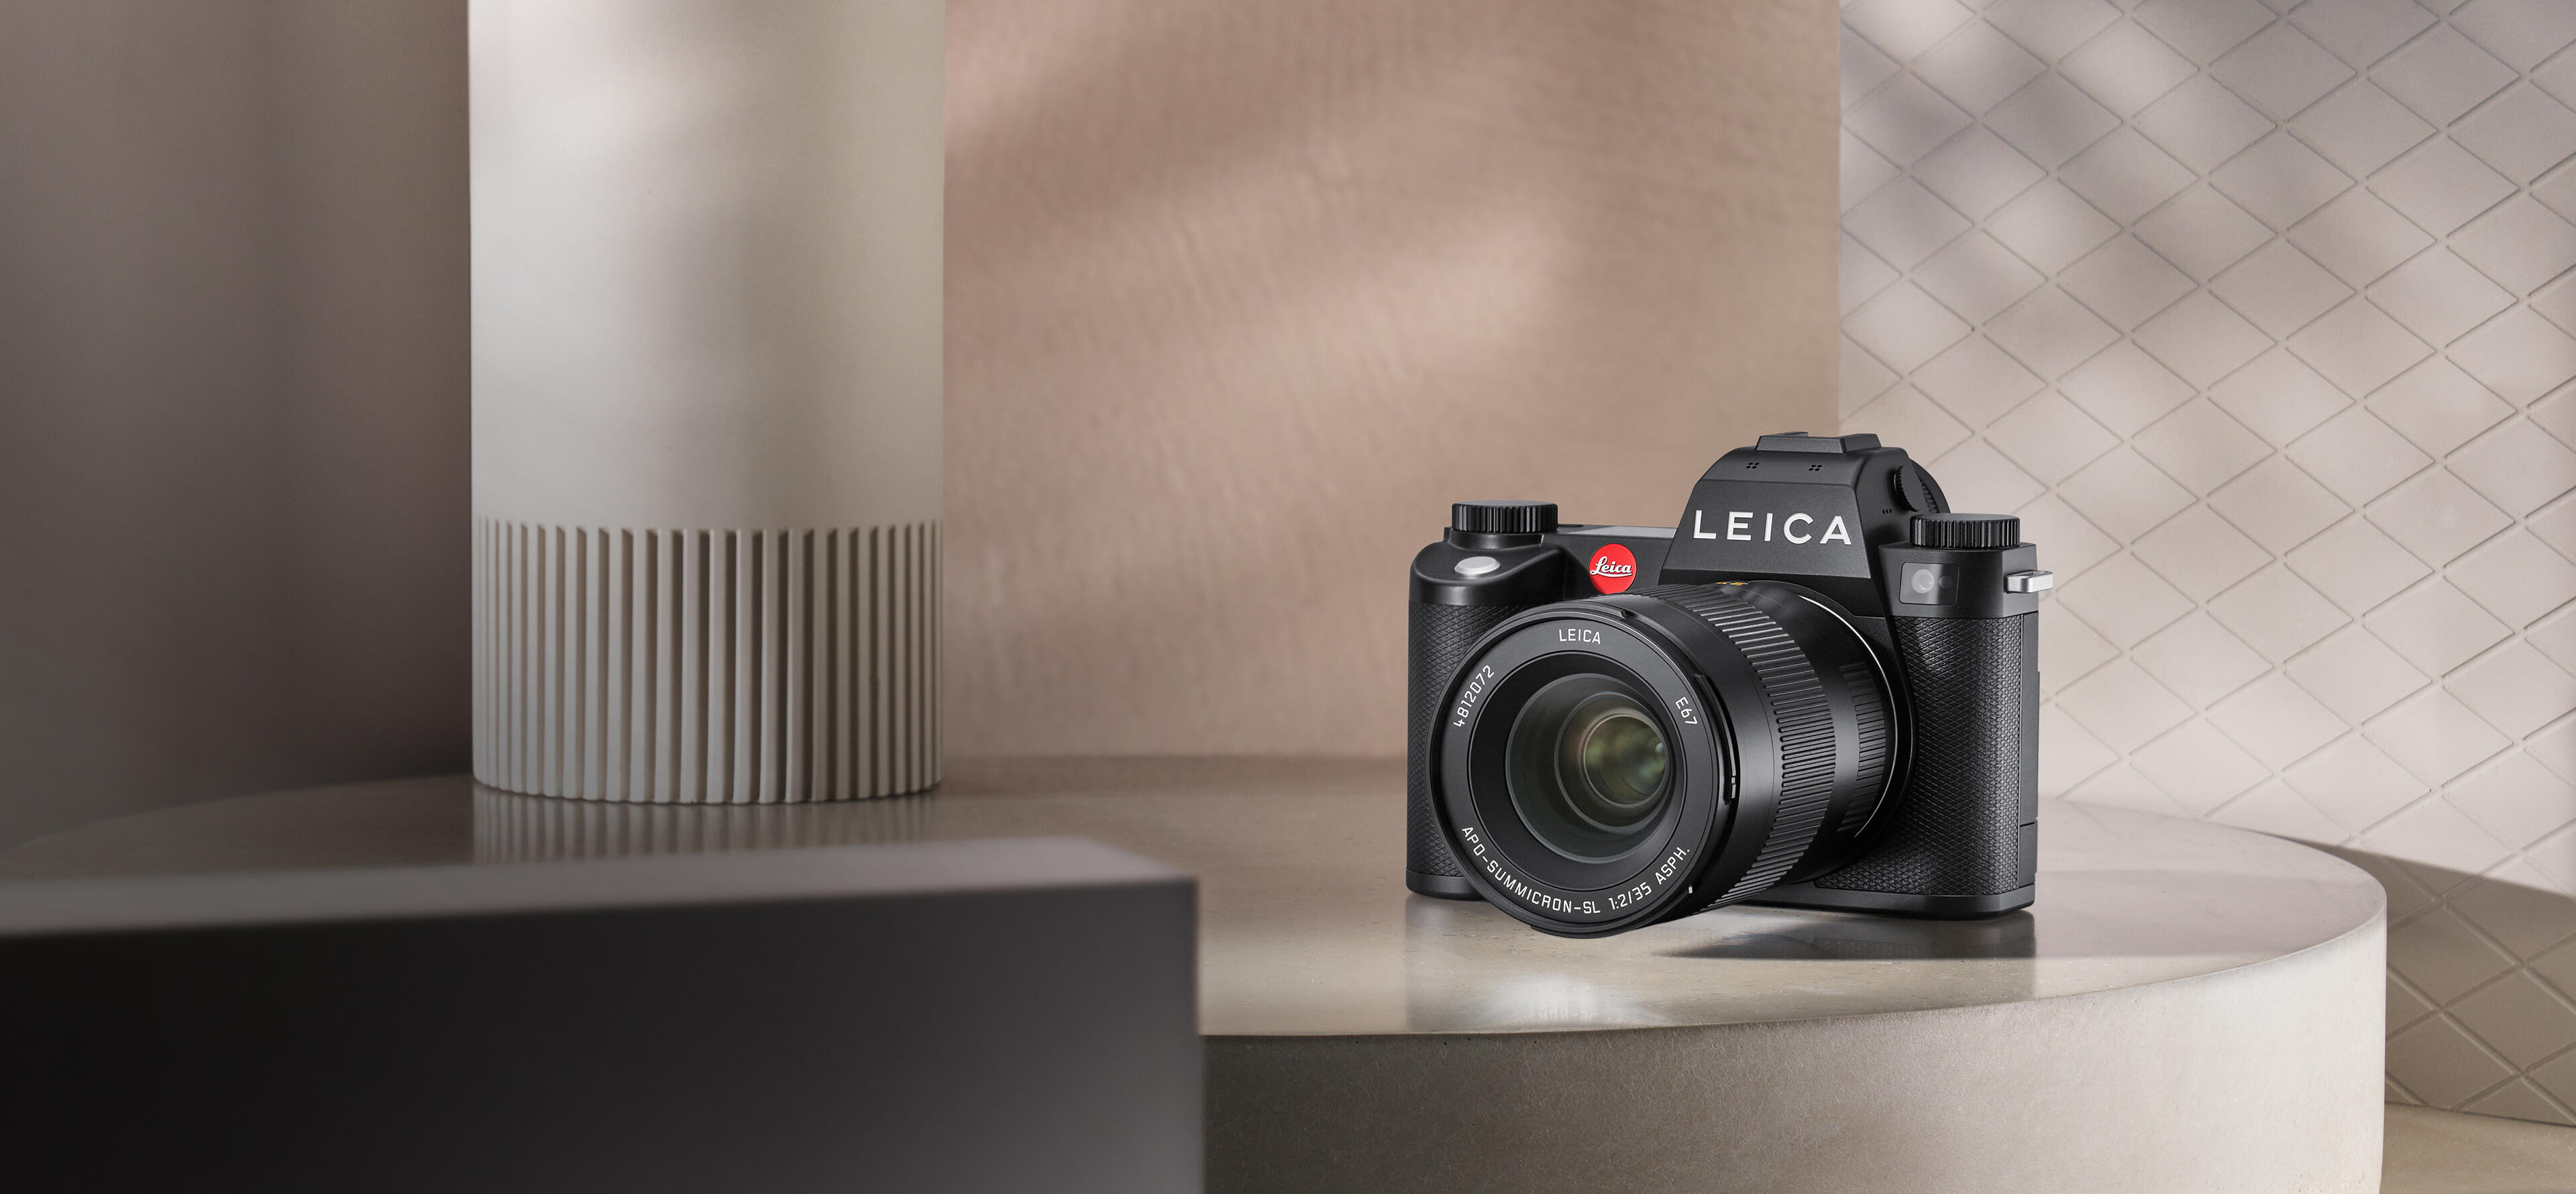 Leica SL3 | Leica Camera AG